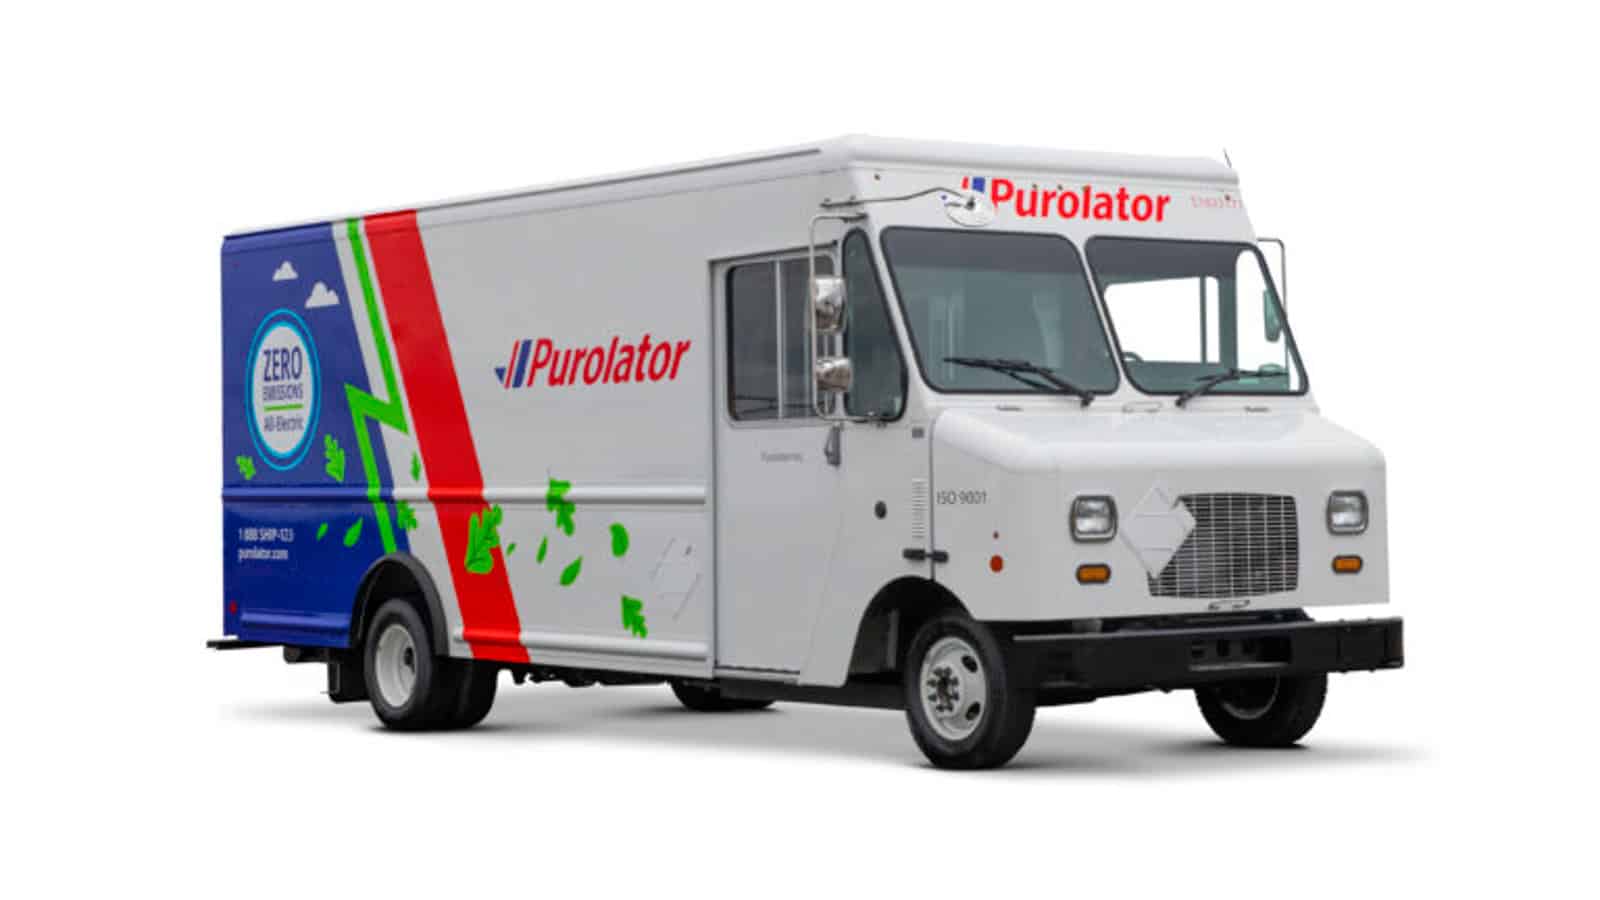 Purolator Electric Trucks Partnership with Motiv Powers Canada Last-Mile Delivery - walk-in step van